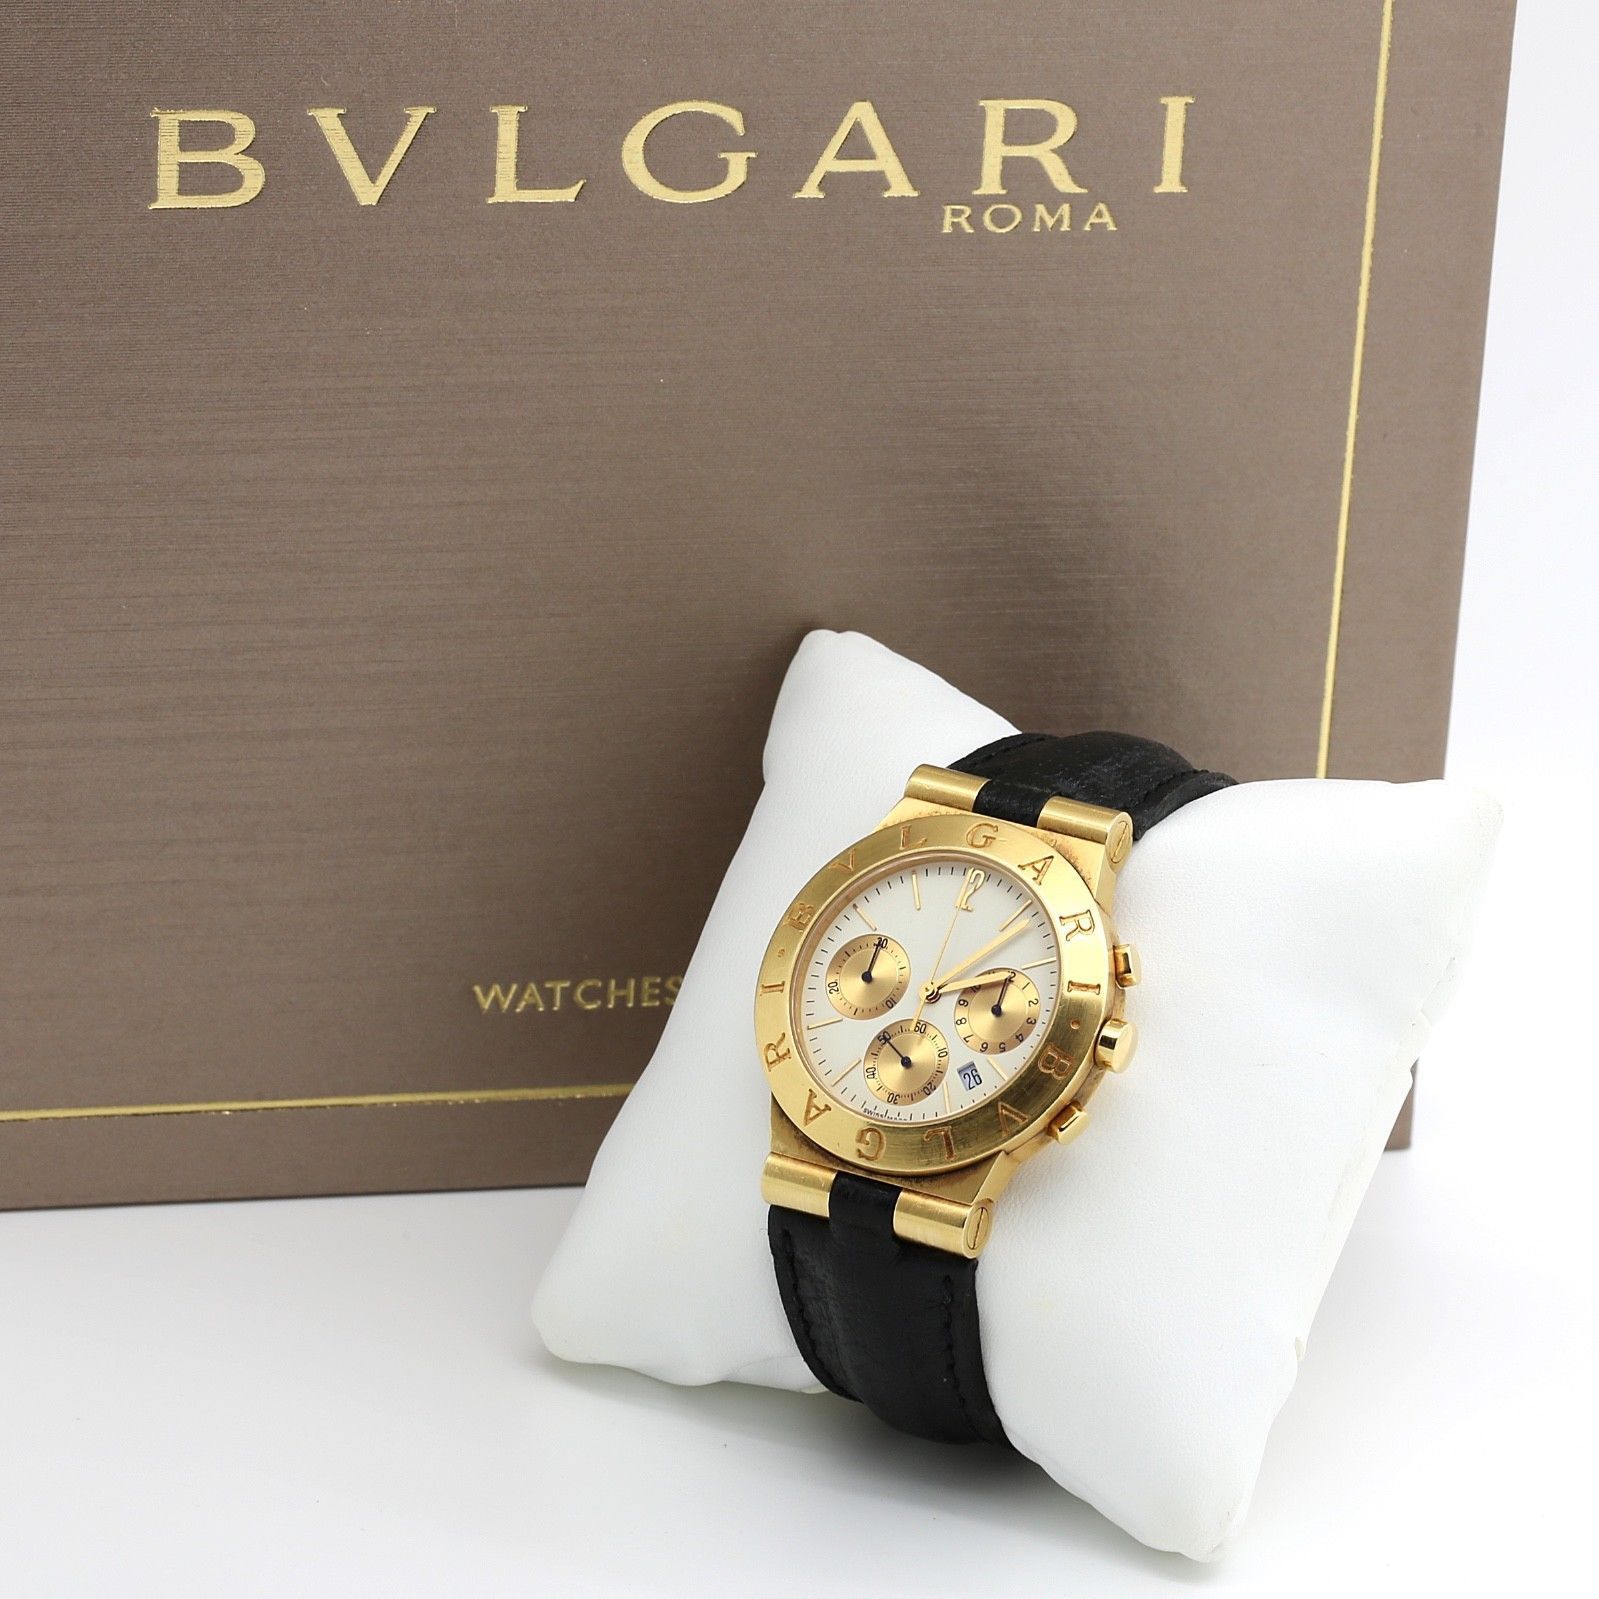 BVLGARI (ブルガリ) の時計の買取相場とおすすめ高価買取店を徹底 